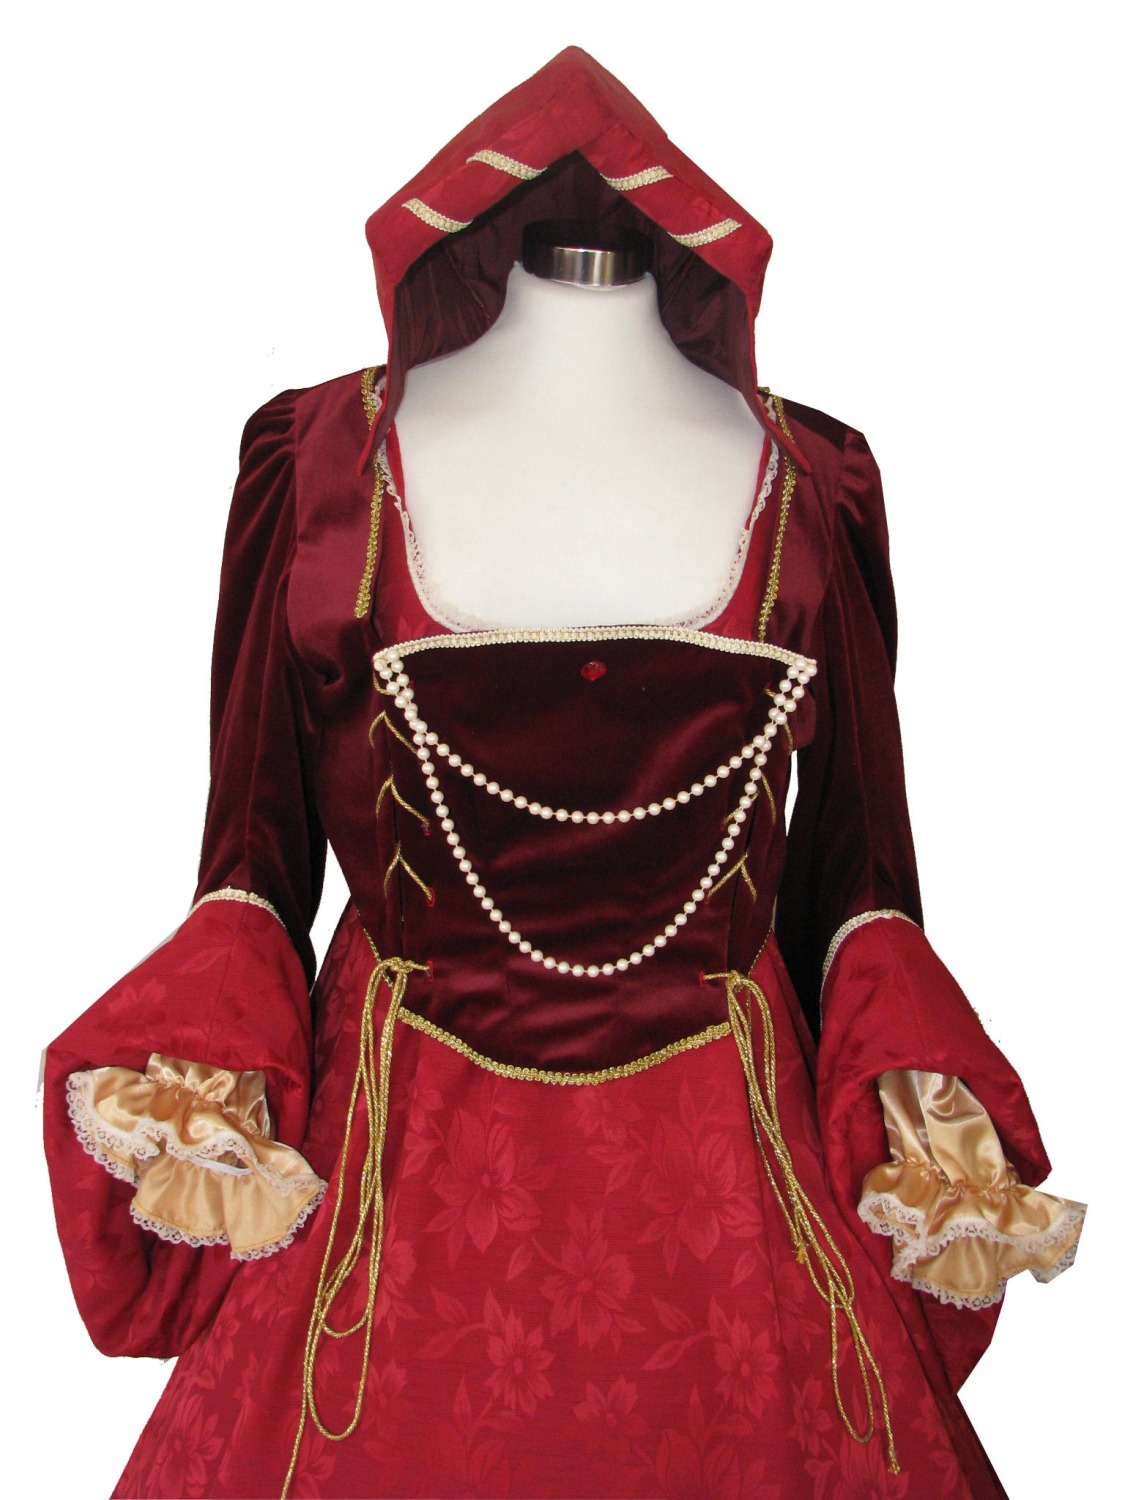 Ladies Deluxe Medieval Tudor Catherine of Aragon Costume Size 18 - 22 Image